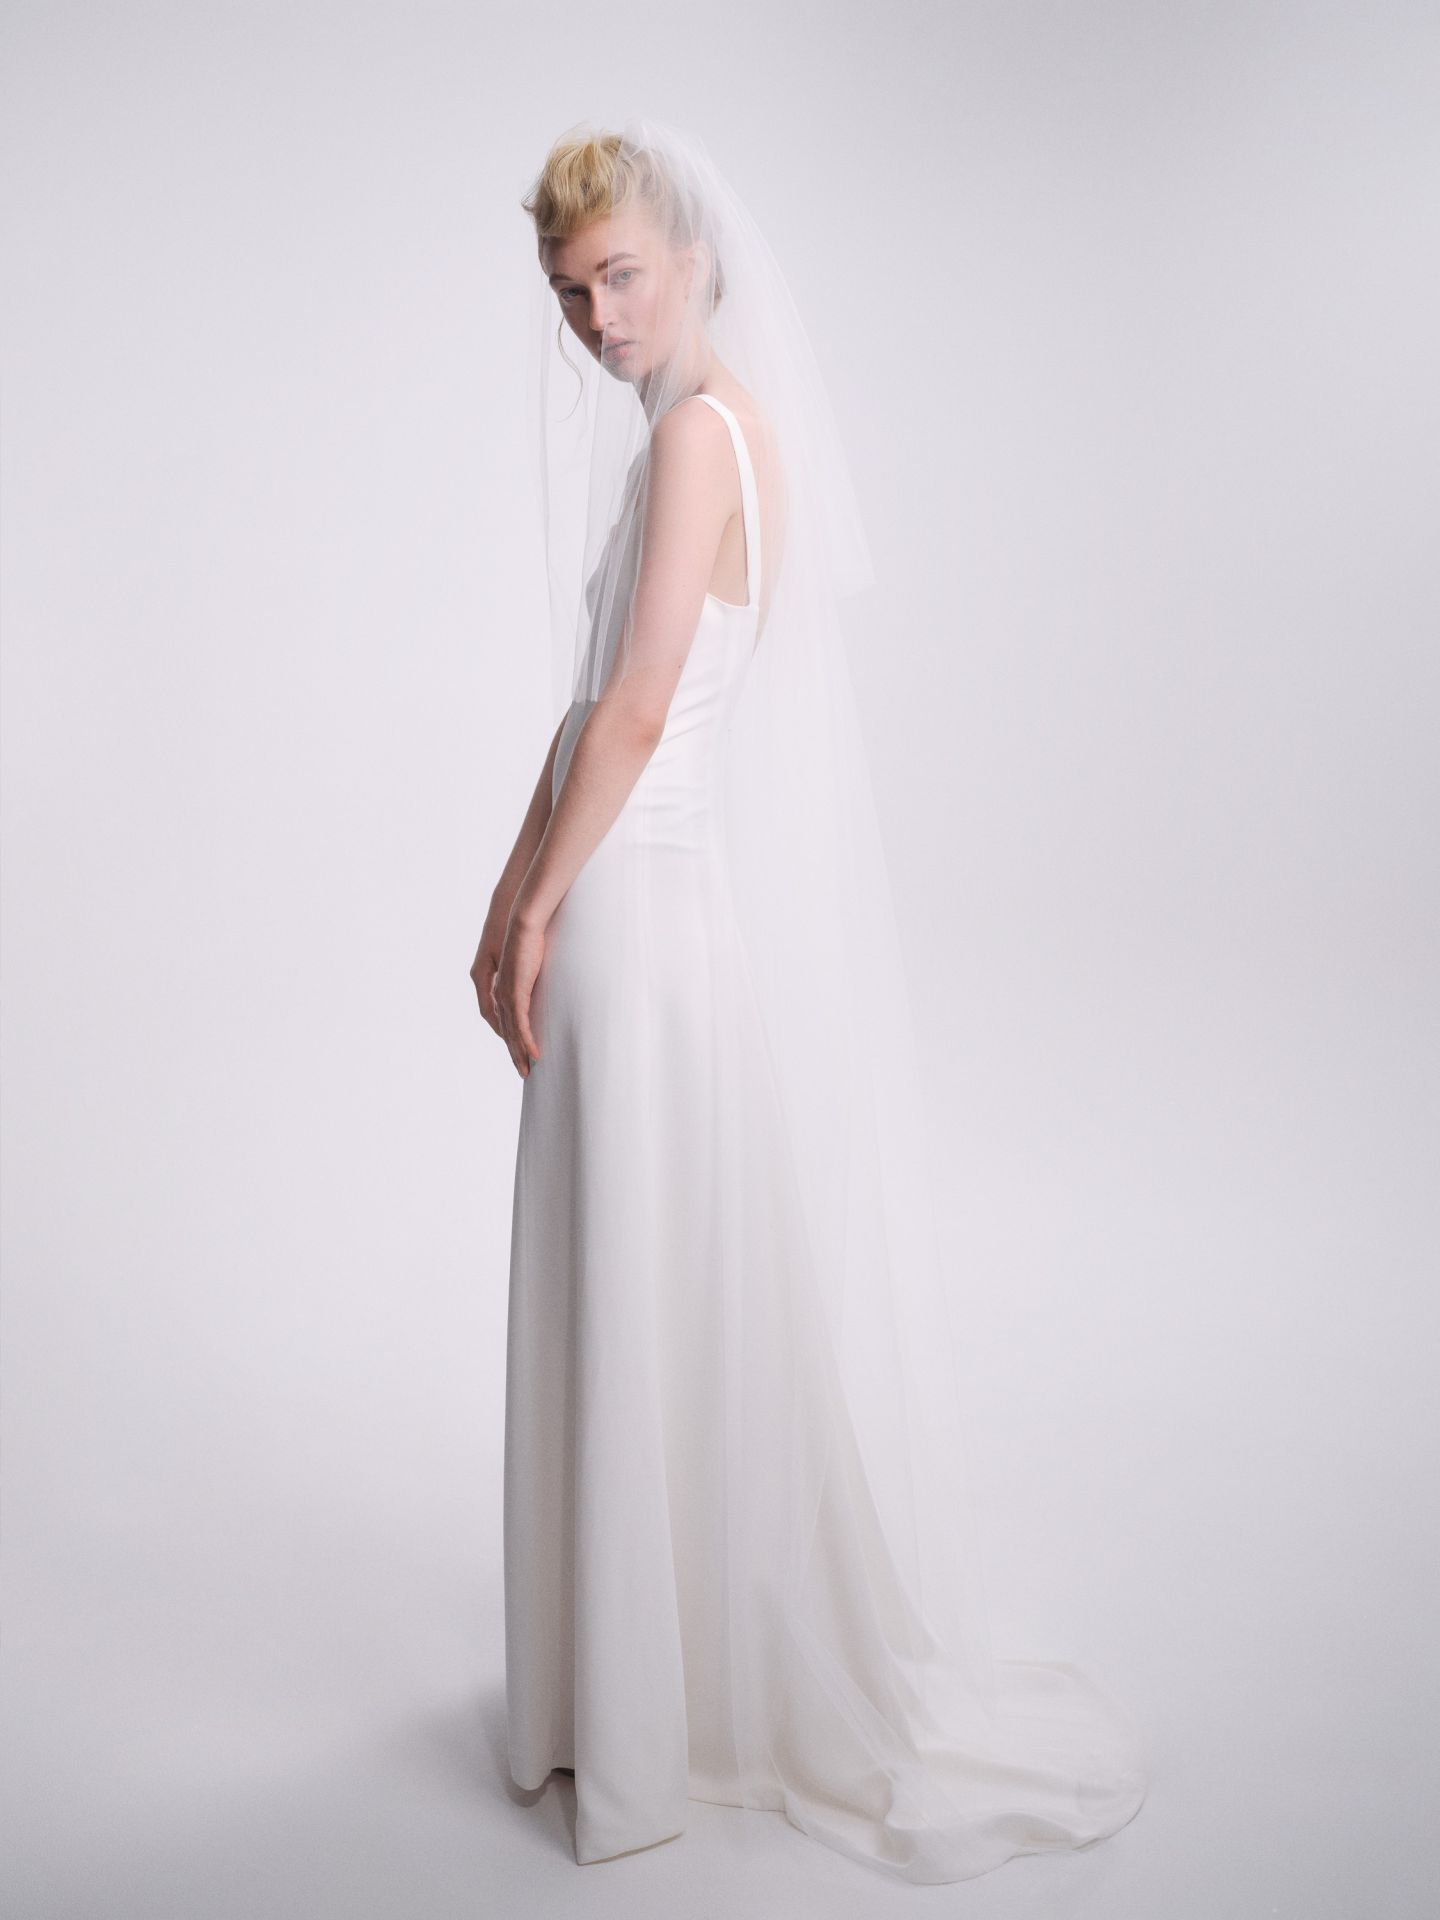 Minimal Designer Wedding Dress with Veil